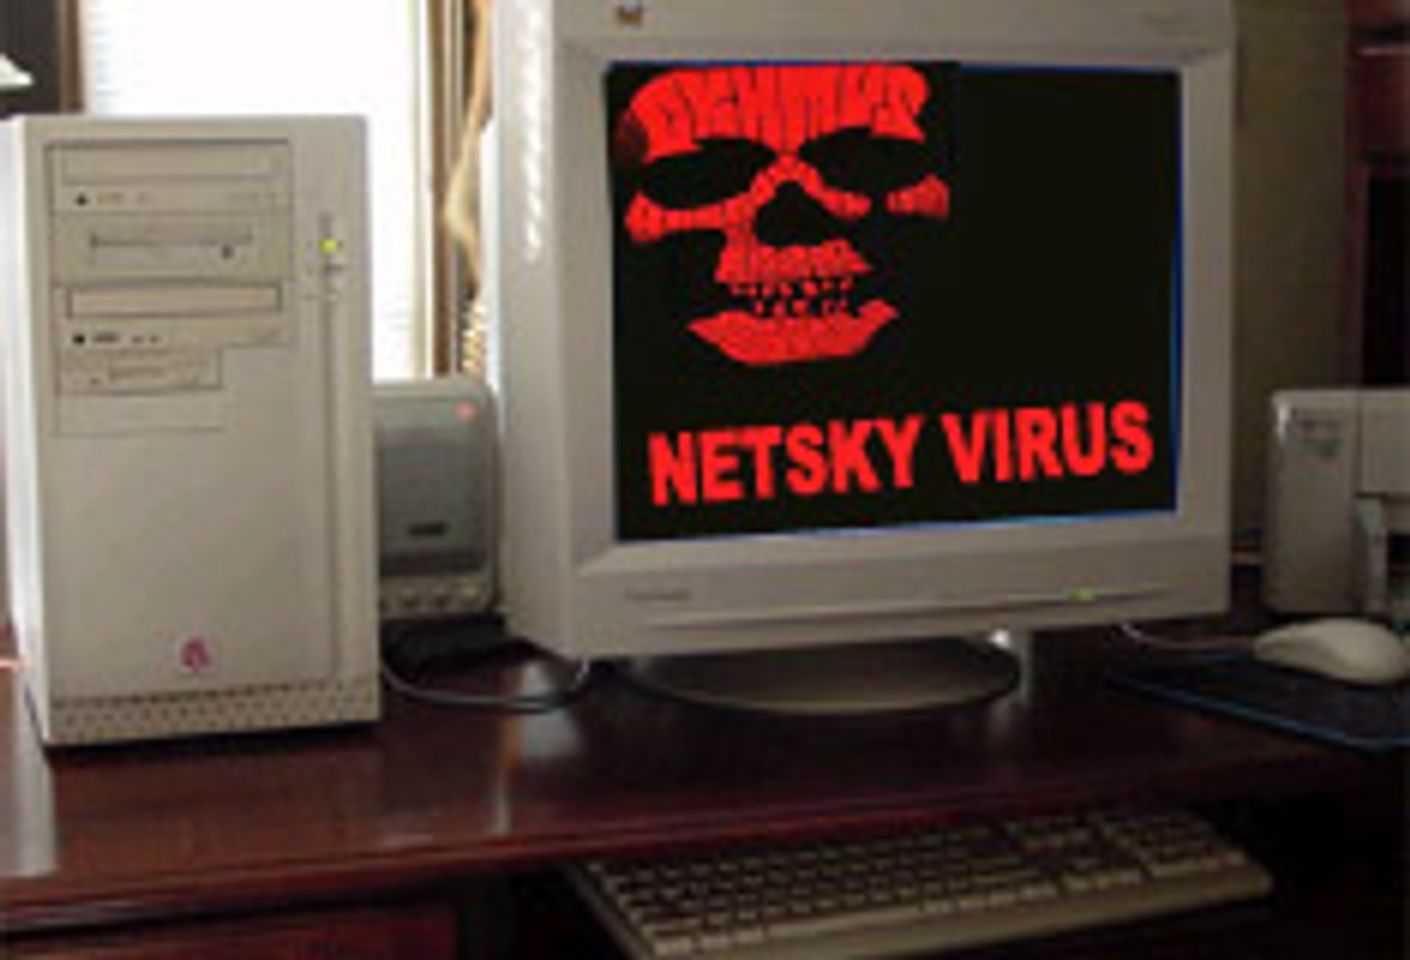 Netsky Top July Virus: Report